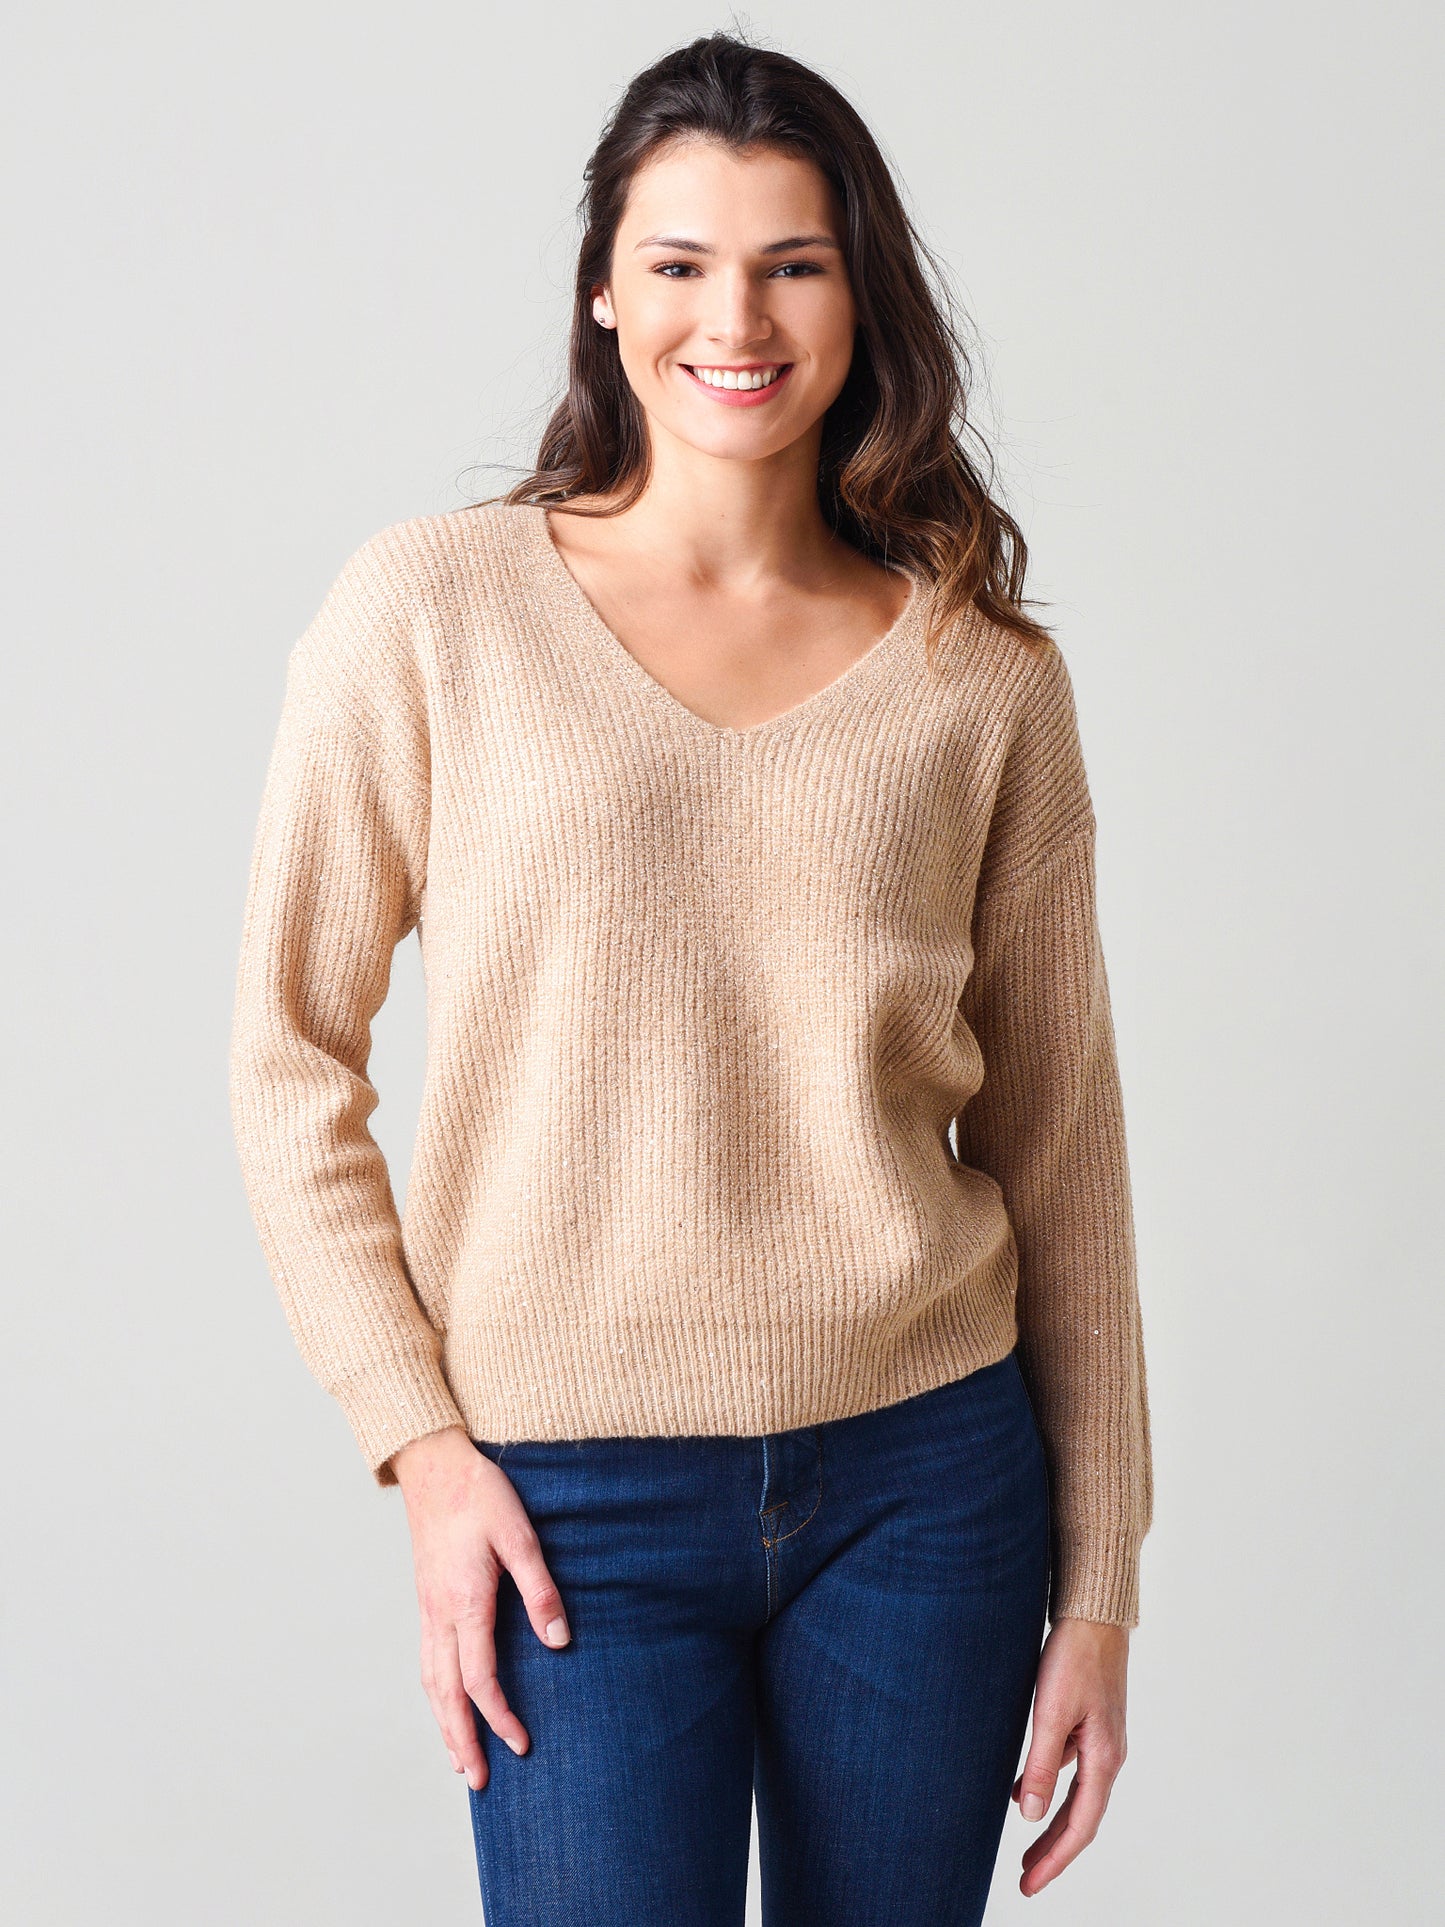 Heartloom Women's Zeva Sweater